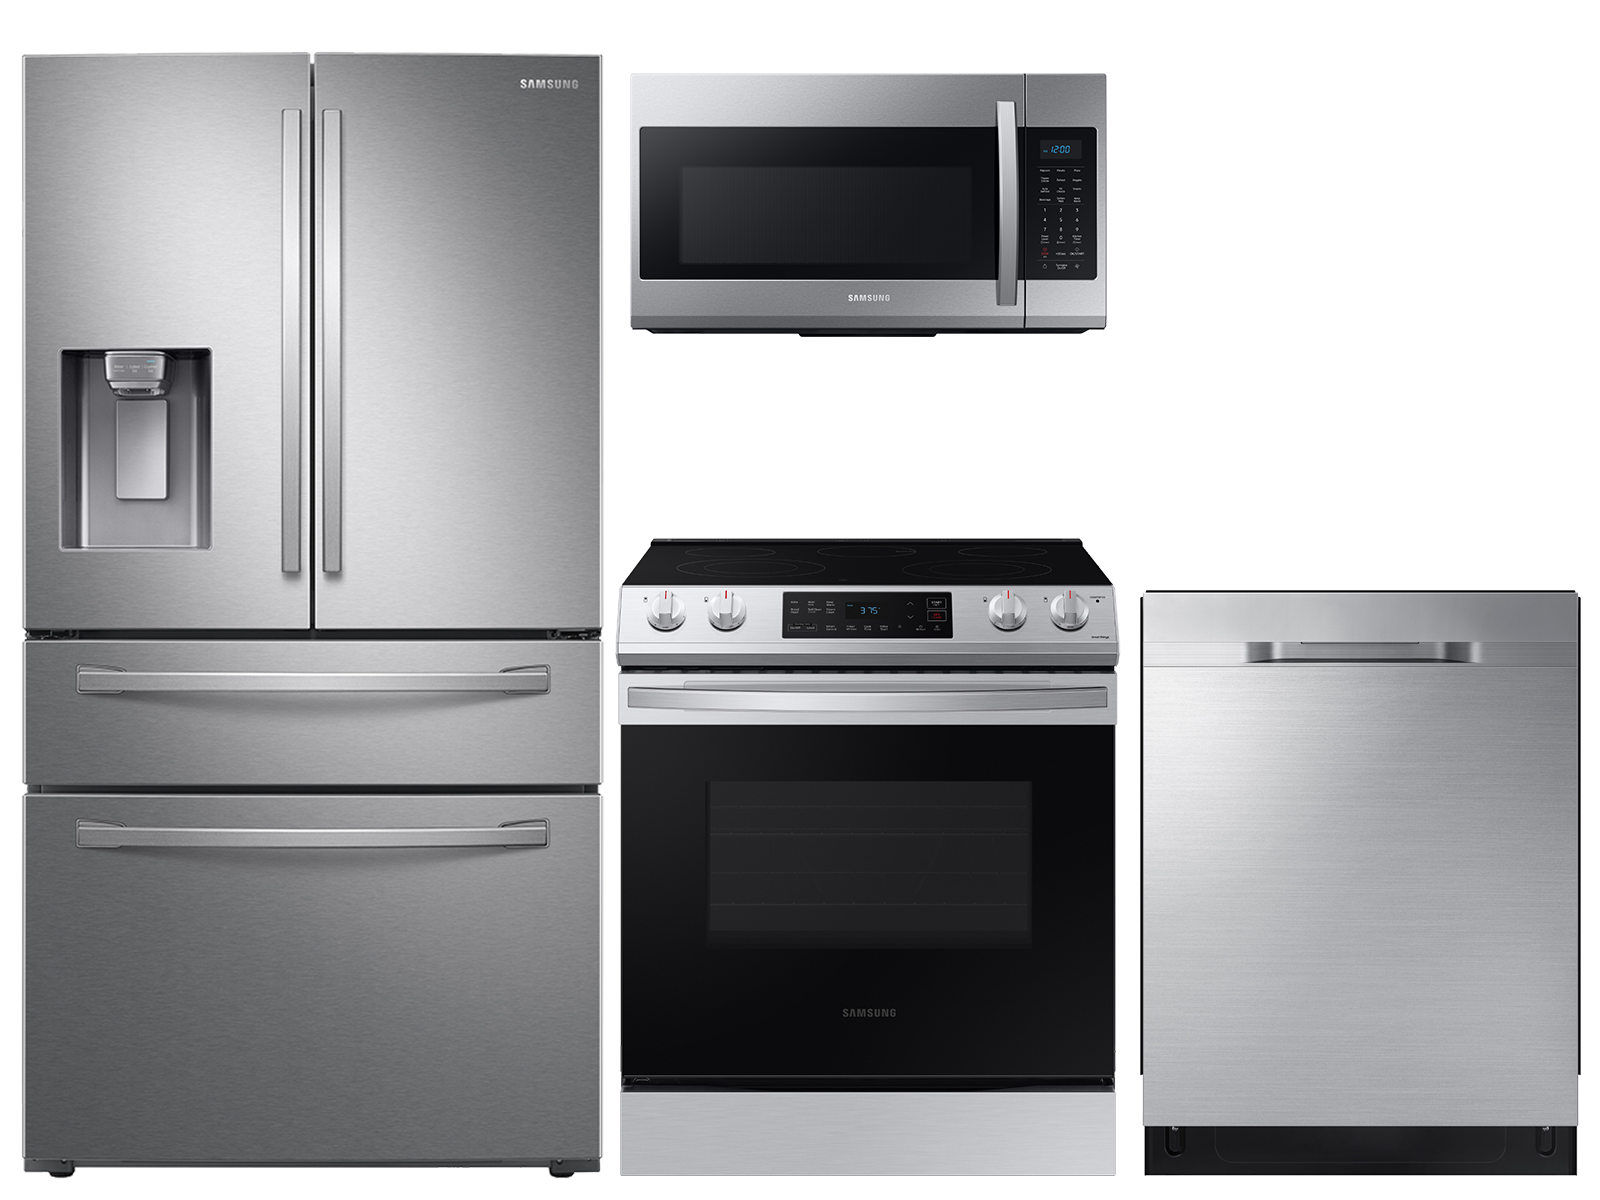 Samsung 28 cu. ft. 4-door refrigerator, 6.3 cu. ft. electric range, microwave and 48 dBA dishwasher package(BNDL-1613506659614)